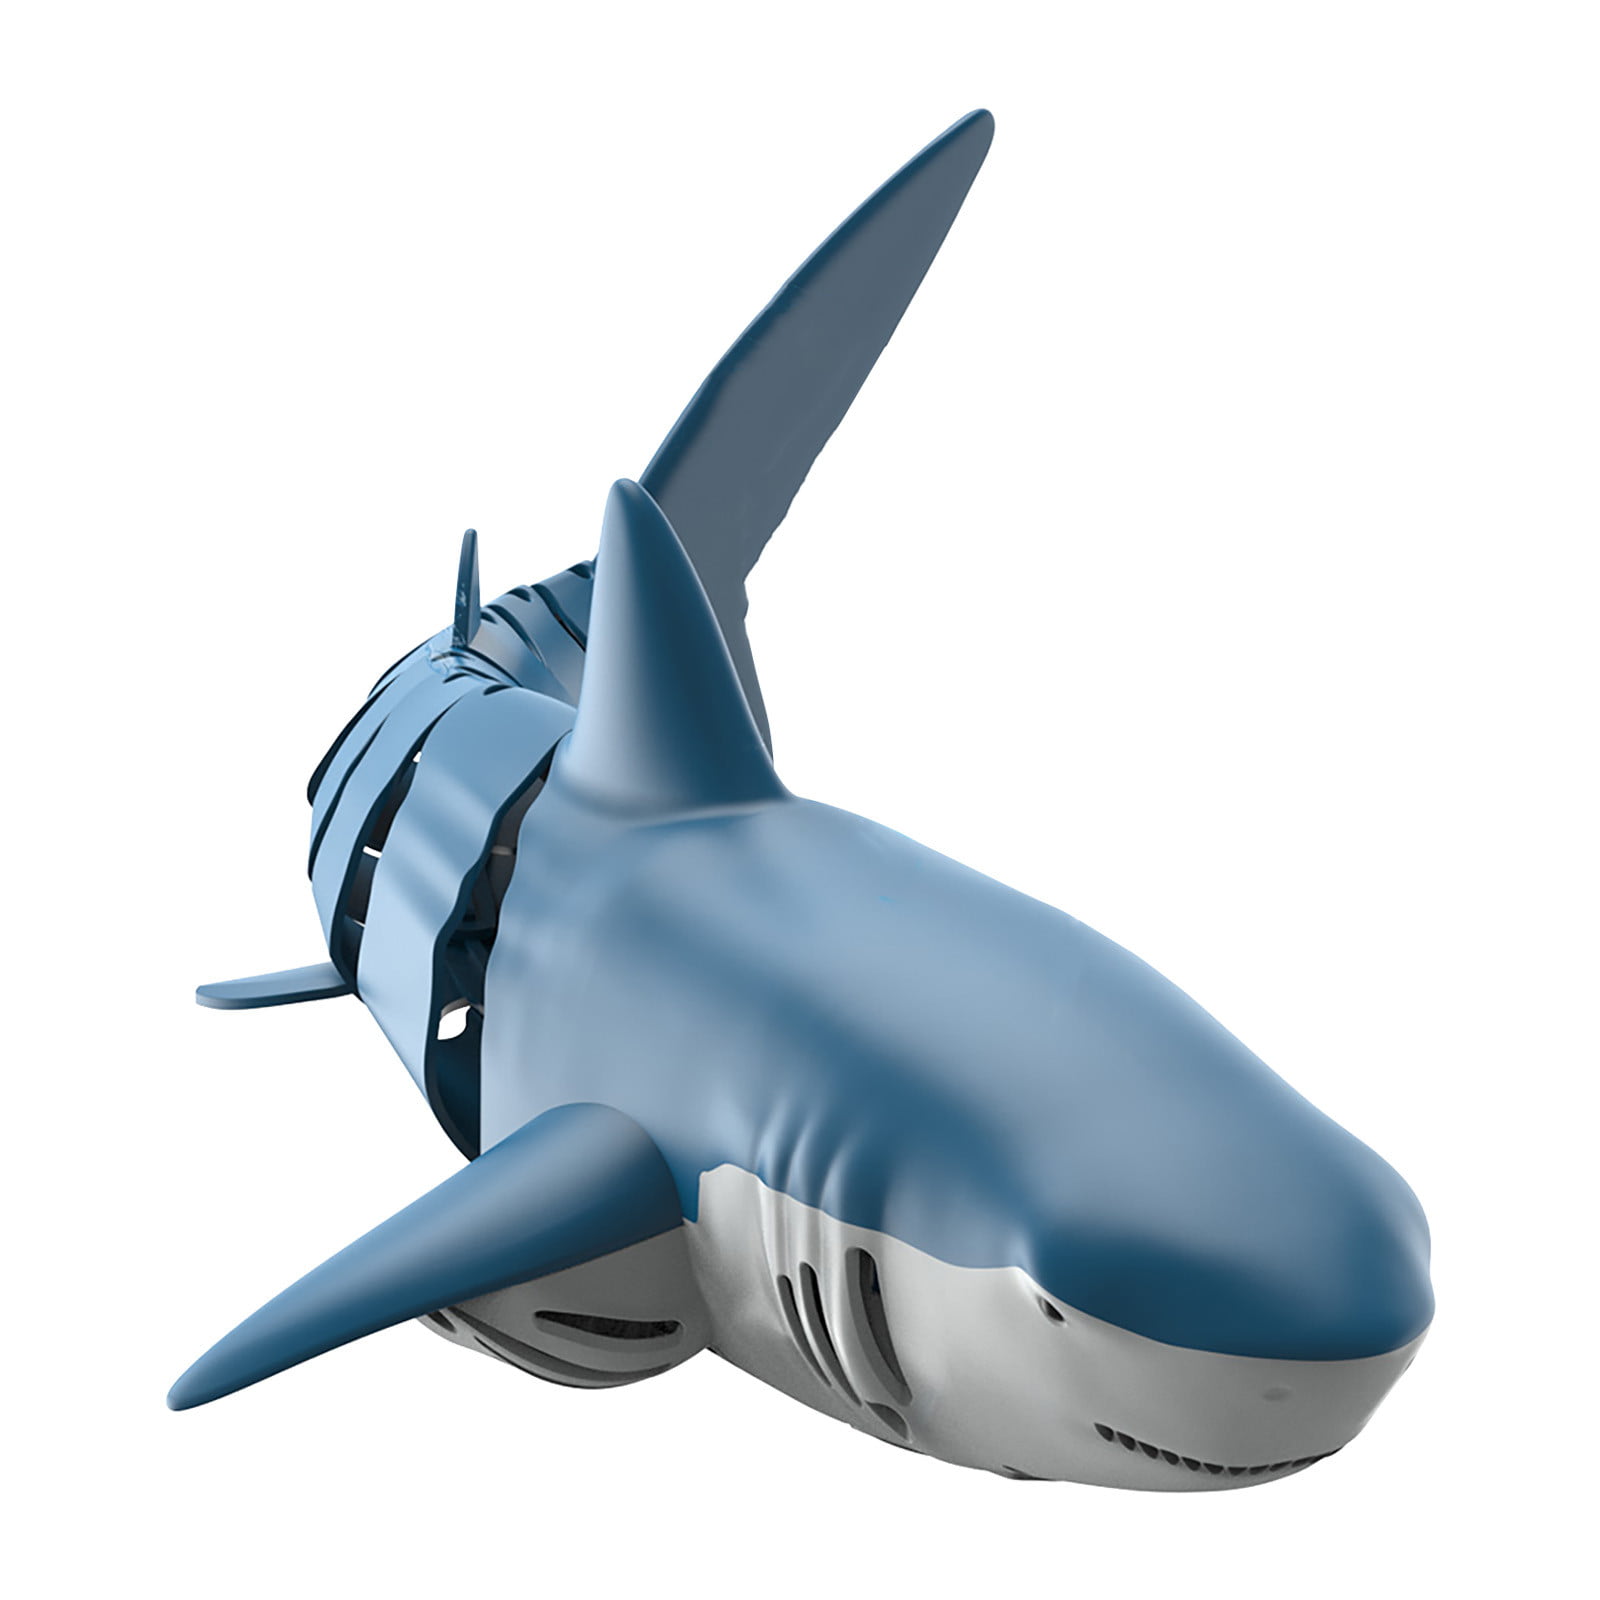 Lifelike Shark Shaped Toy Realistic Motion Simulation Animal Model Kids P2Z0 